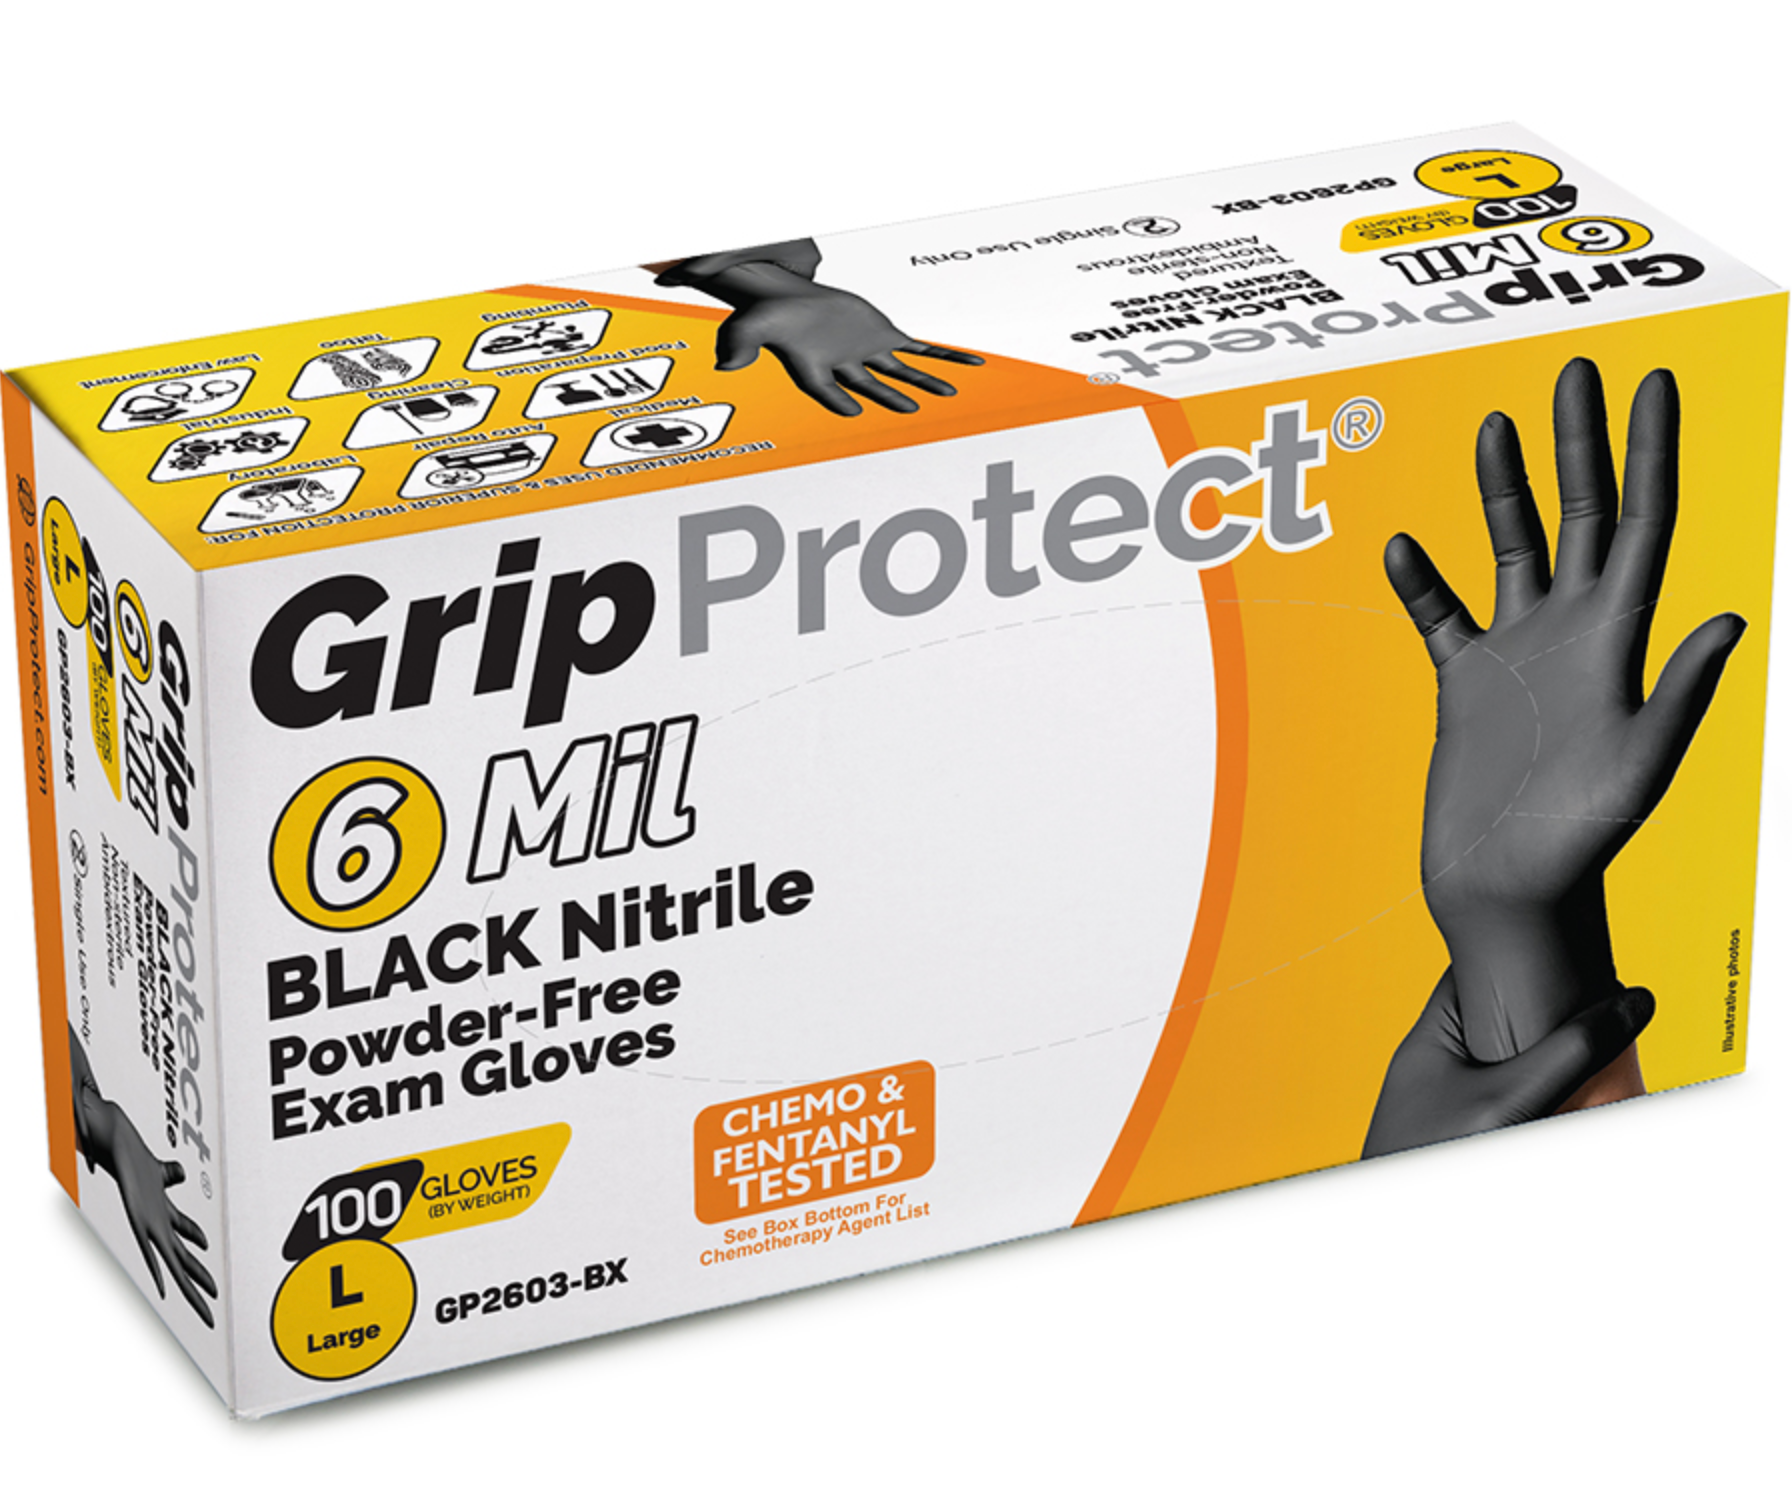 GripProtect® 6 Mil BLACK Nitrile Powder-Free Exam Gloves